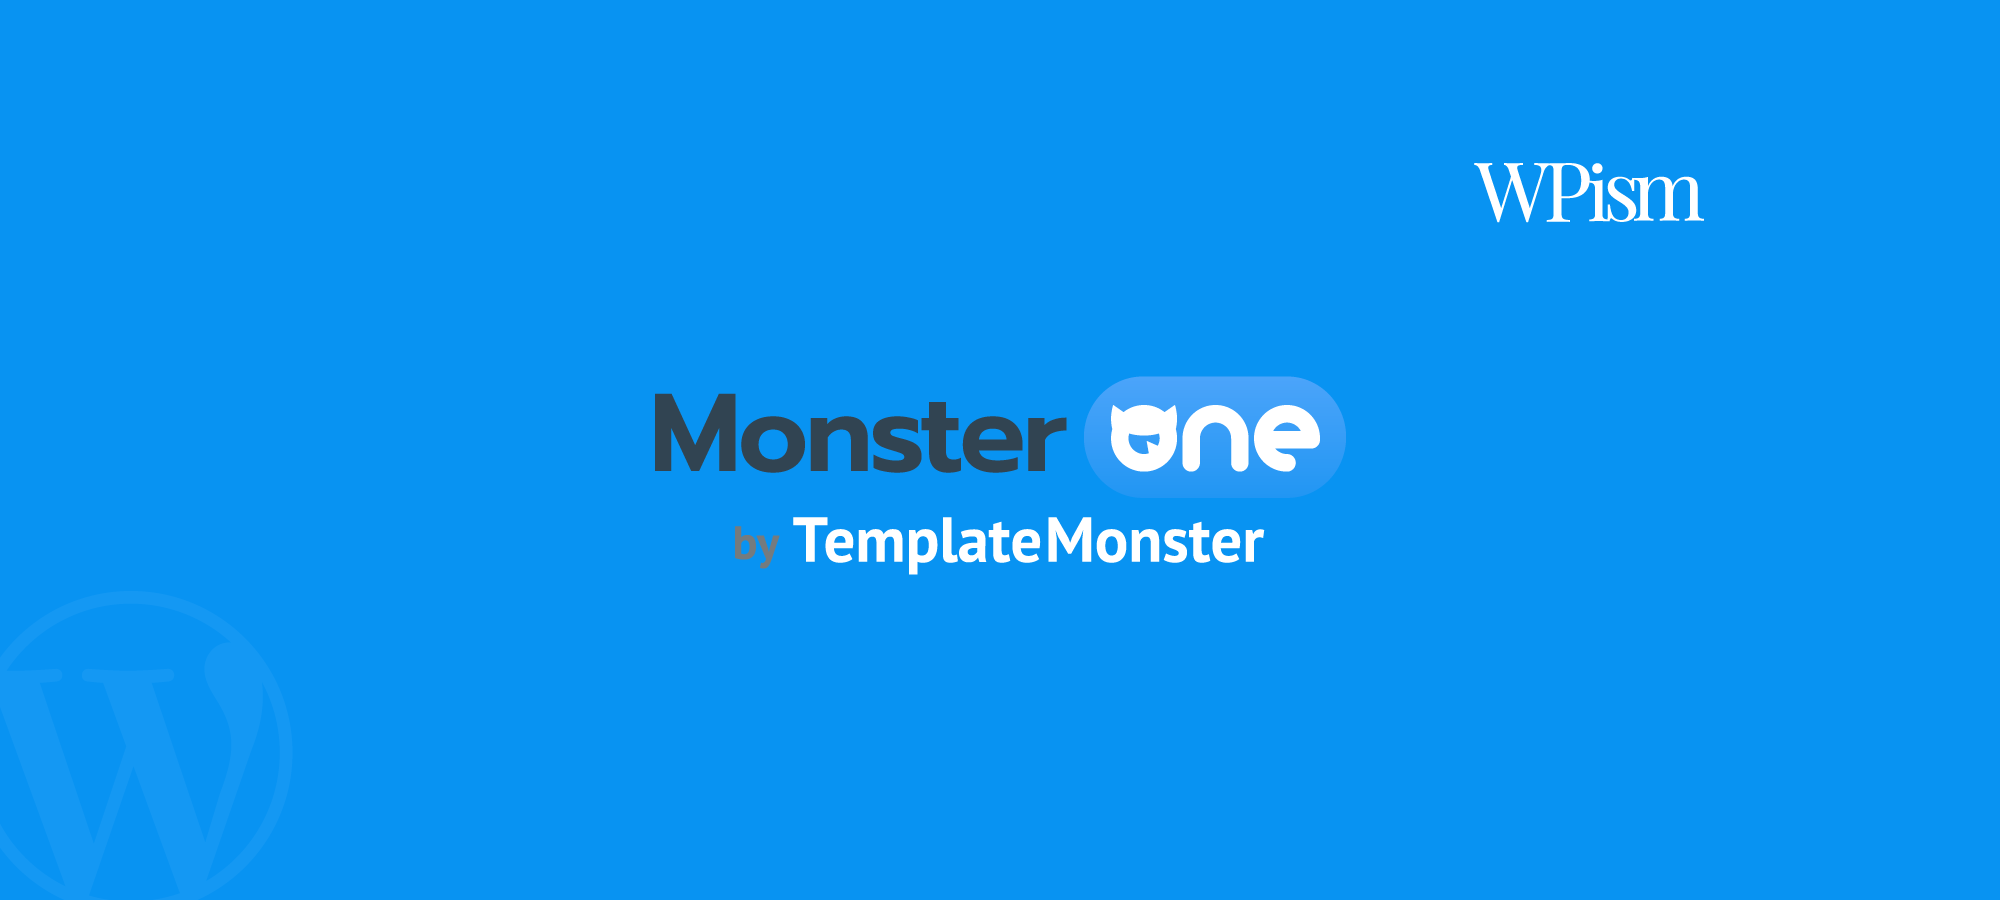 Monsterone Subscription TemplateMonster